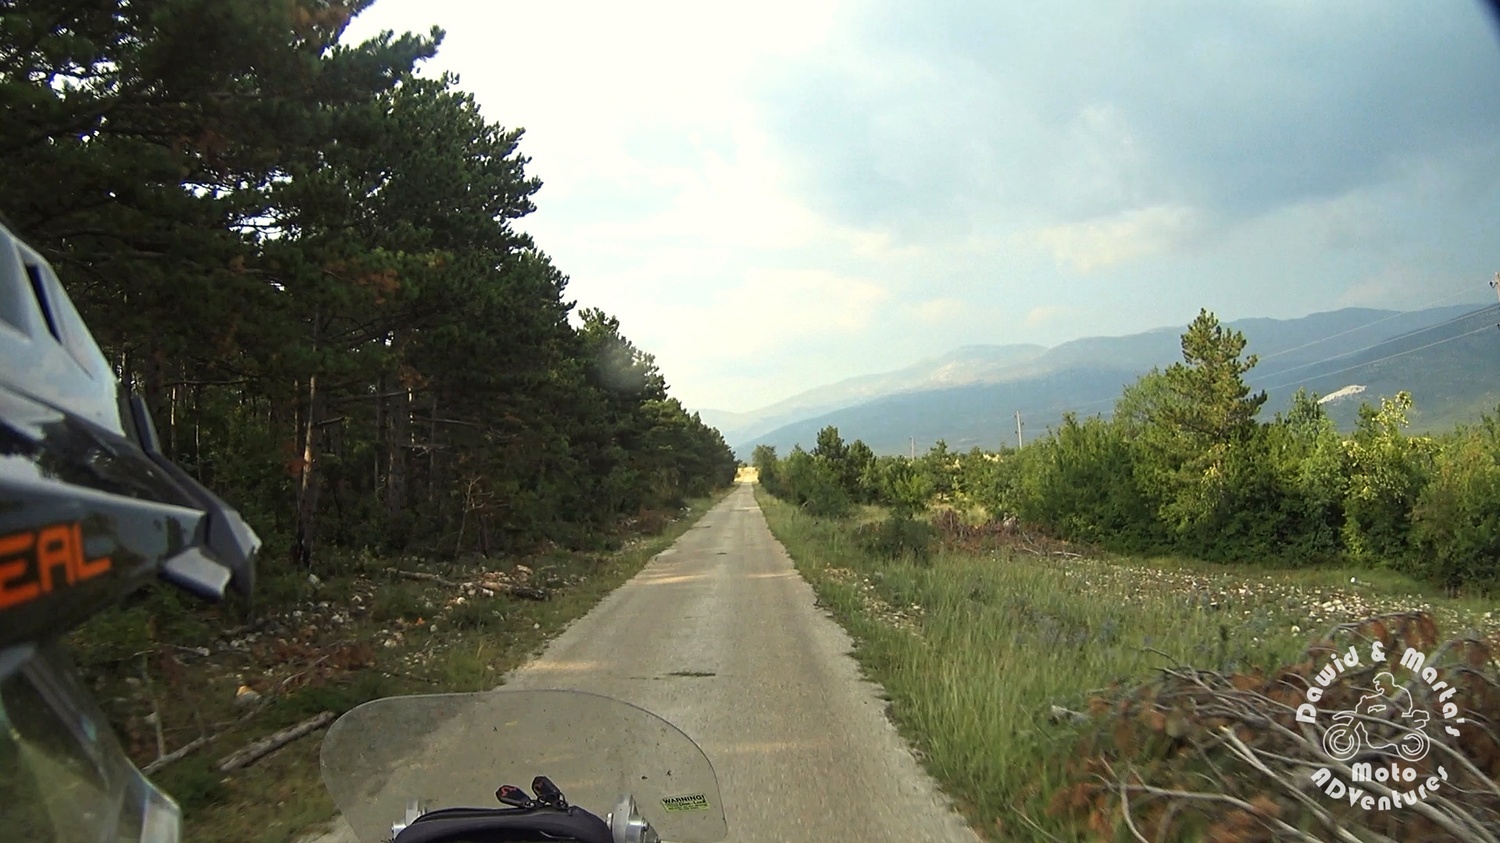 Unnamed road to the Cetina River spring (Izvor Cetine), inland Croatia